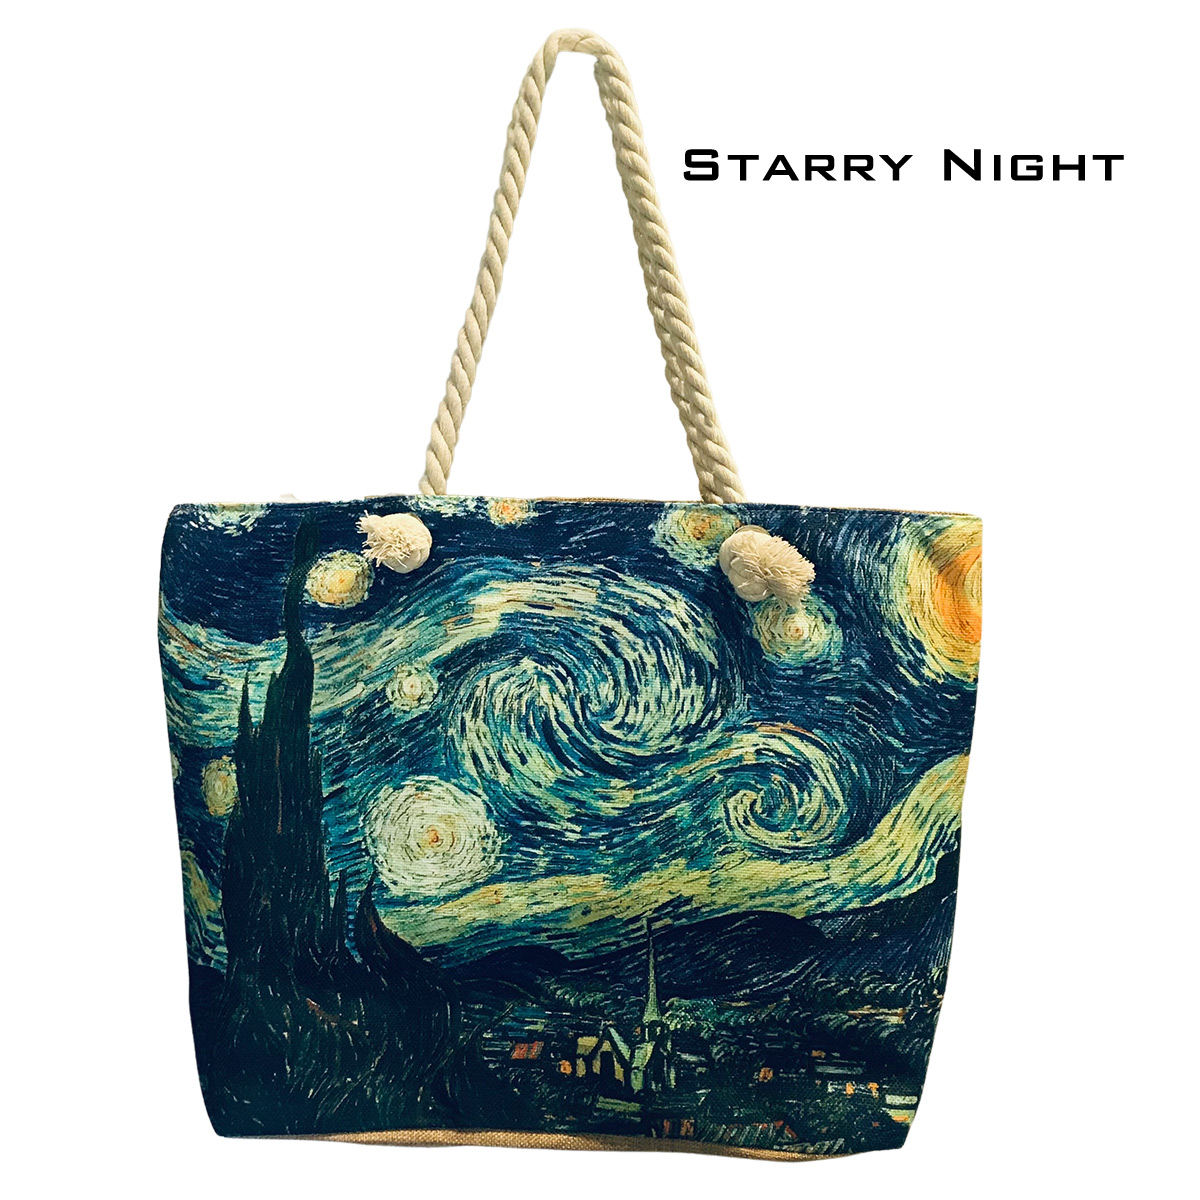 Starry Night - Vincent Van gogh Backpack